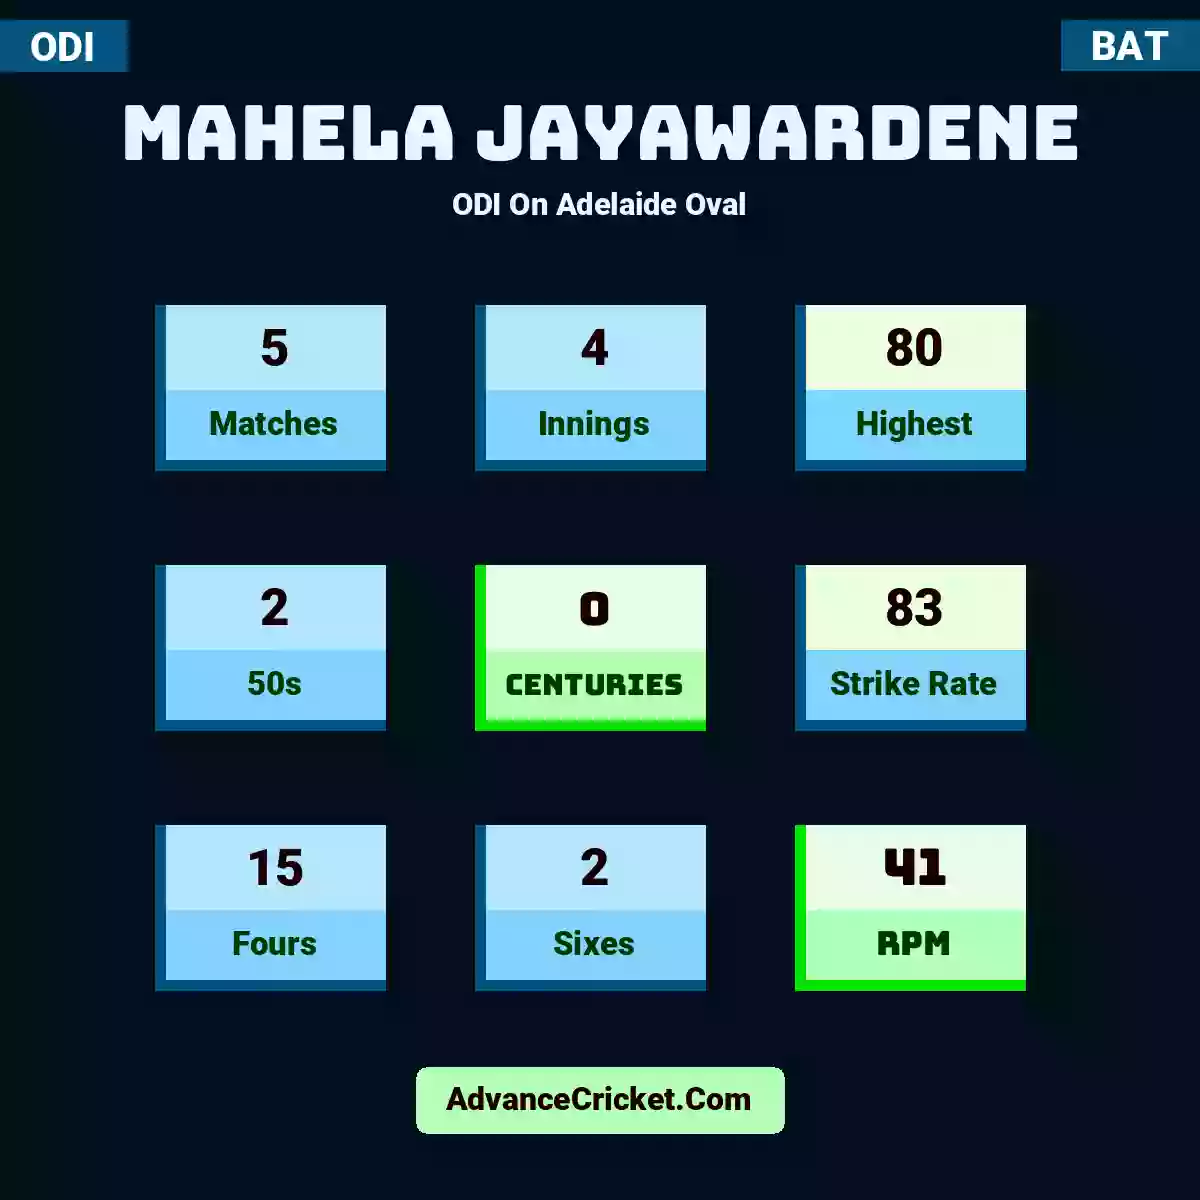 Mahela Jayawardene ODI  On Adelaide Oval, Mahela Jayawardene played 5 matches, scored 80 runs as highest, 2 half-centuries, and 0 centuries, with a strike rate of 83. M.Jayawardene hit 15 fours and 2 sixes, with an RPM of 41.